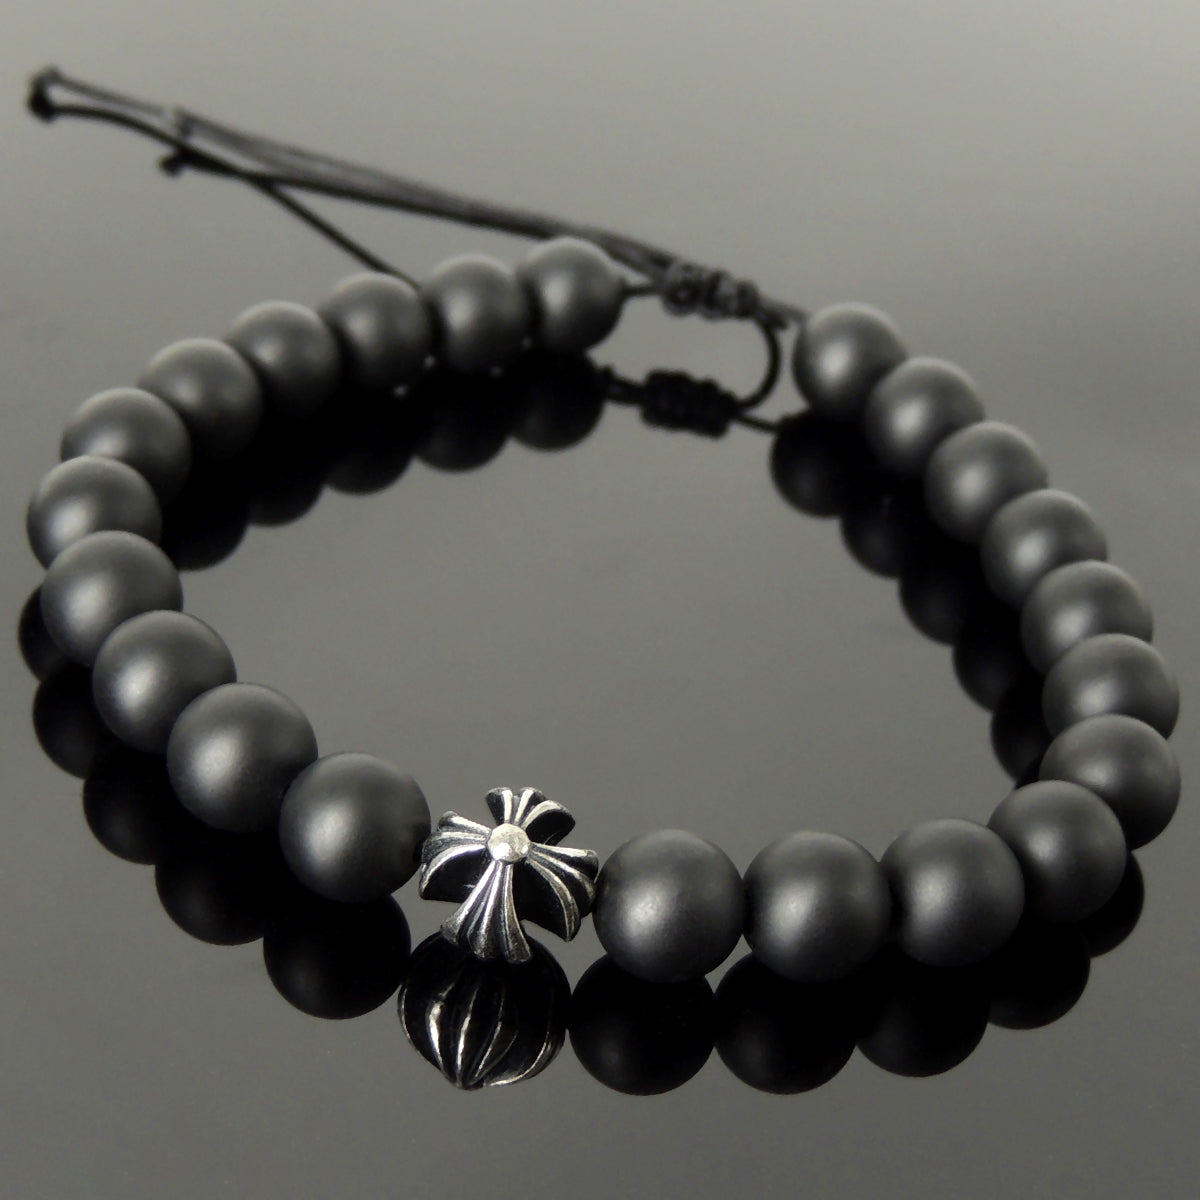 Handmade Braided Healing Gemstone Prayer Bracelet - 8mm Matte Black Onyx, Genuine S925 Sterling Silver Cross Bead, Adjustable Drawstring BR1679